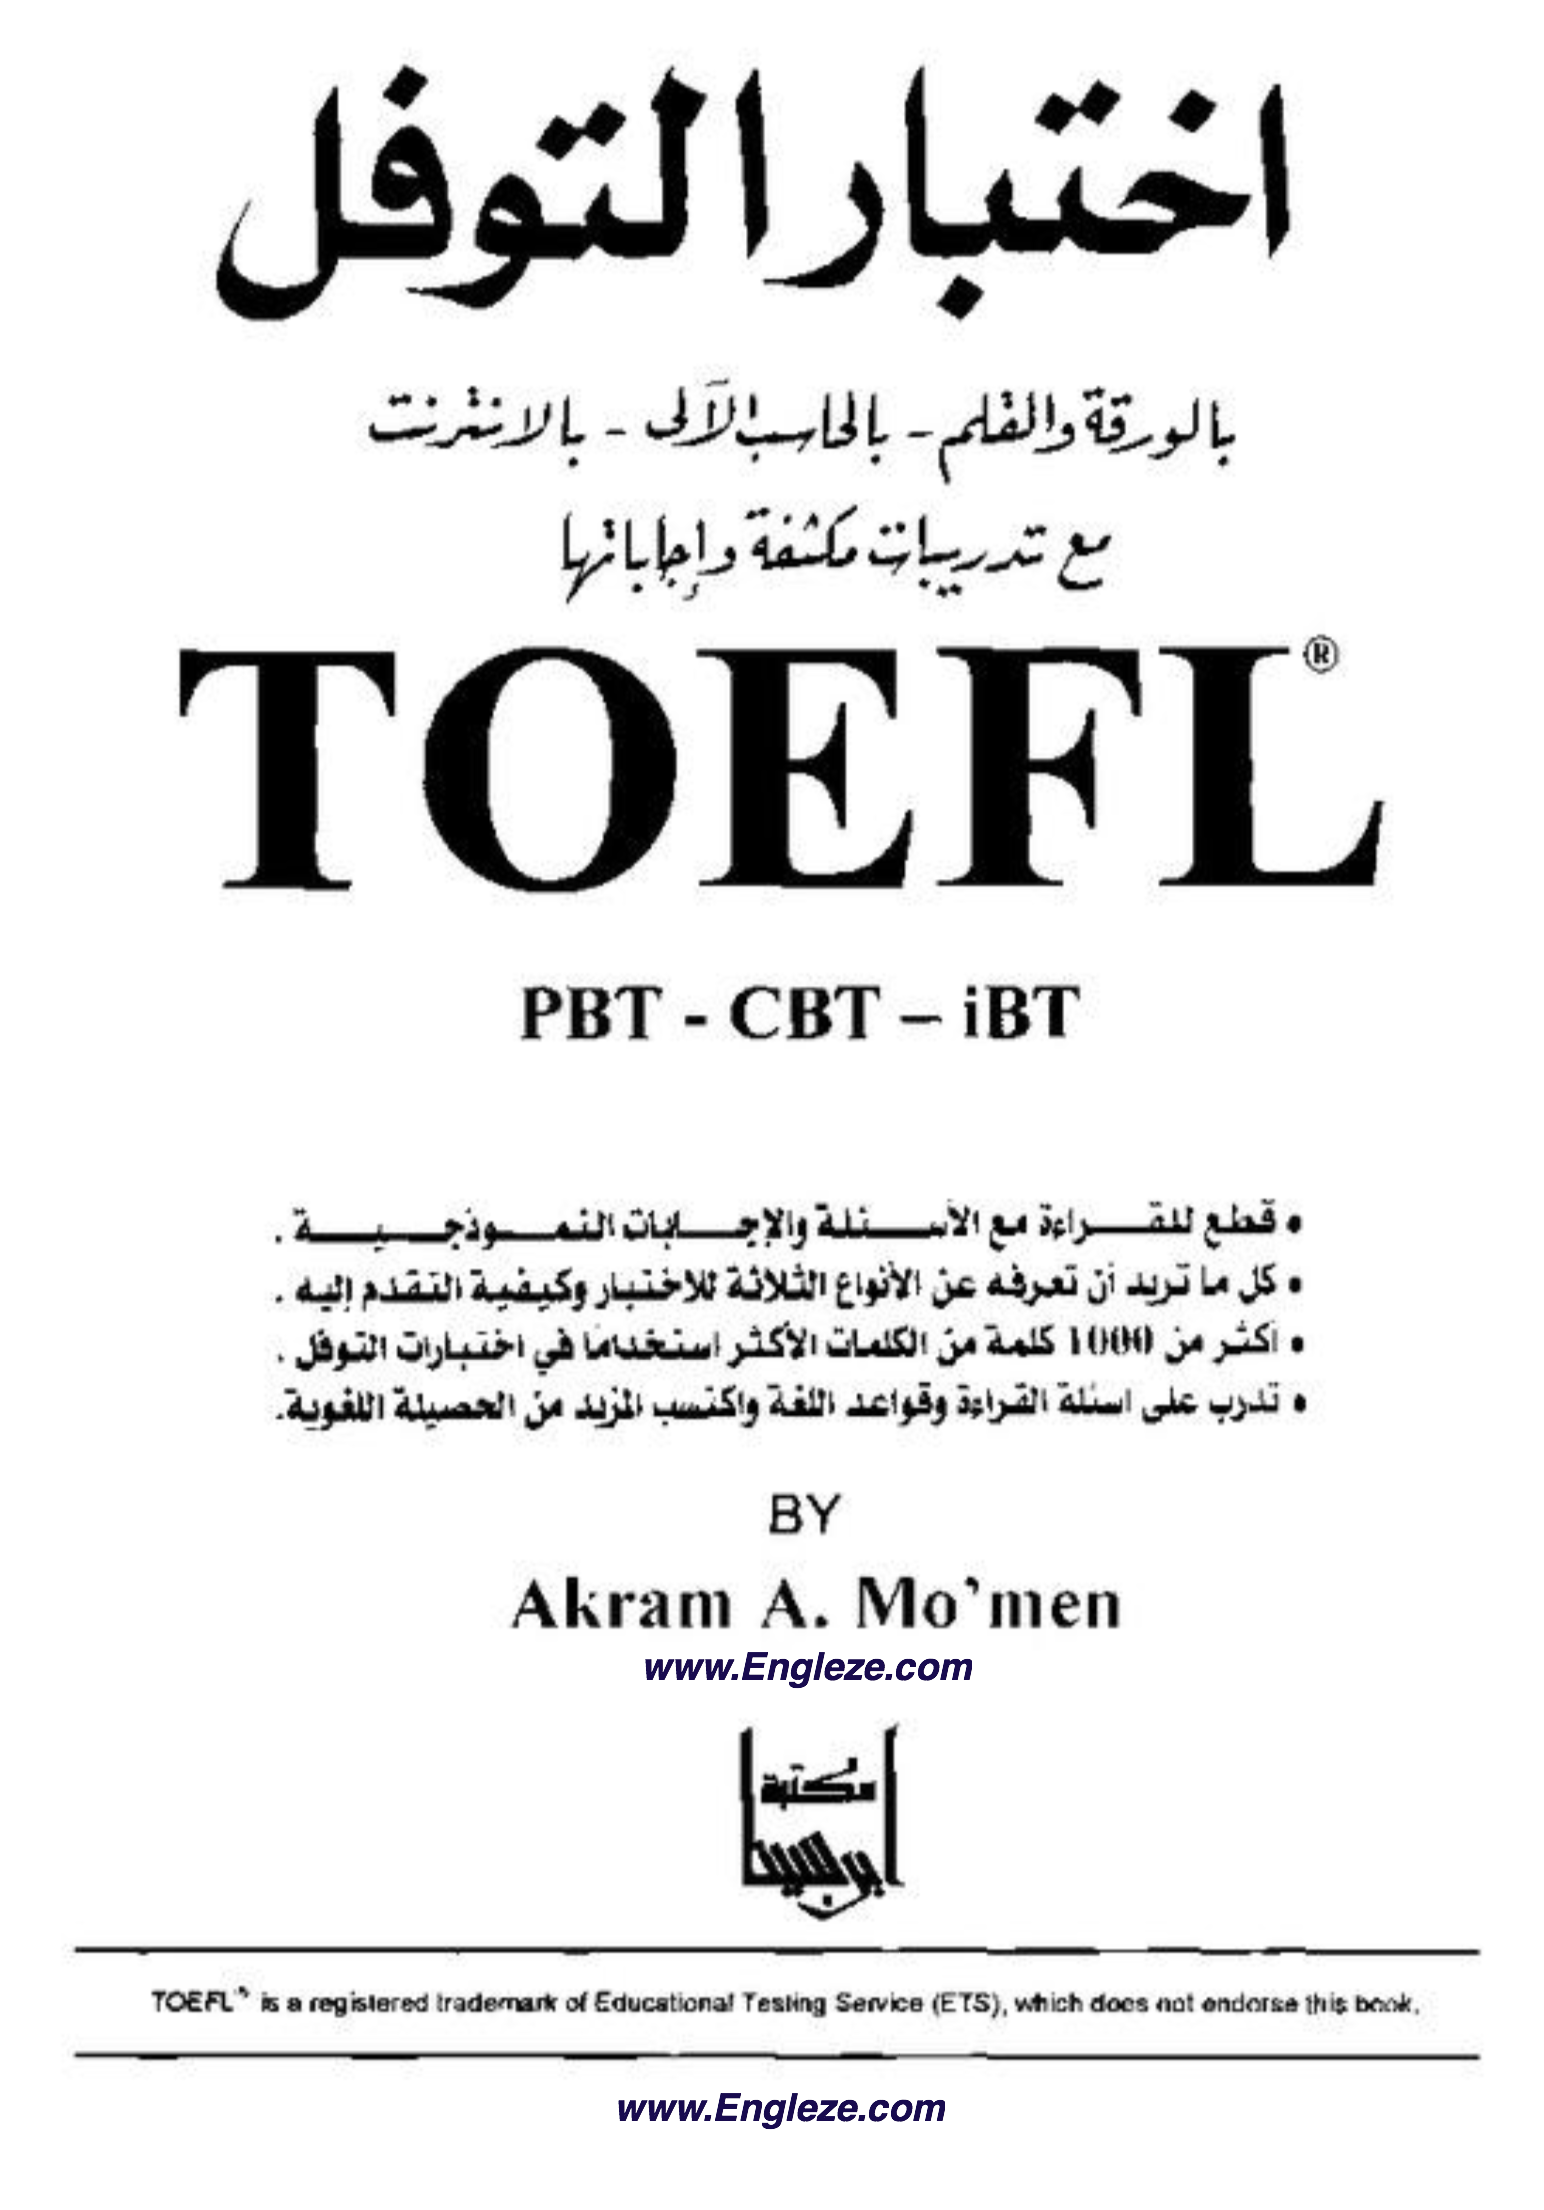 TOEFL PBT - CBT - iBT Book - Engleze.com